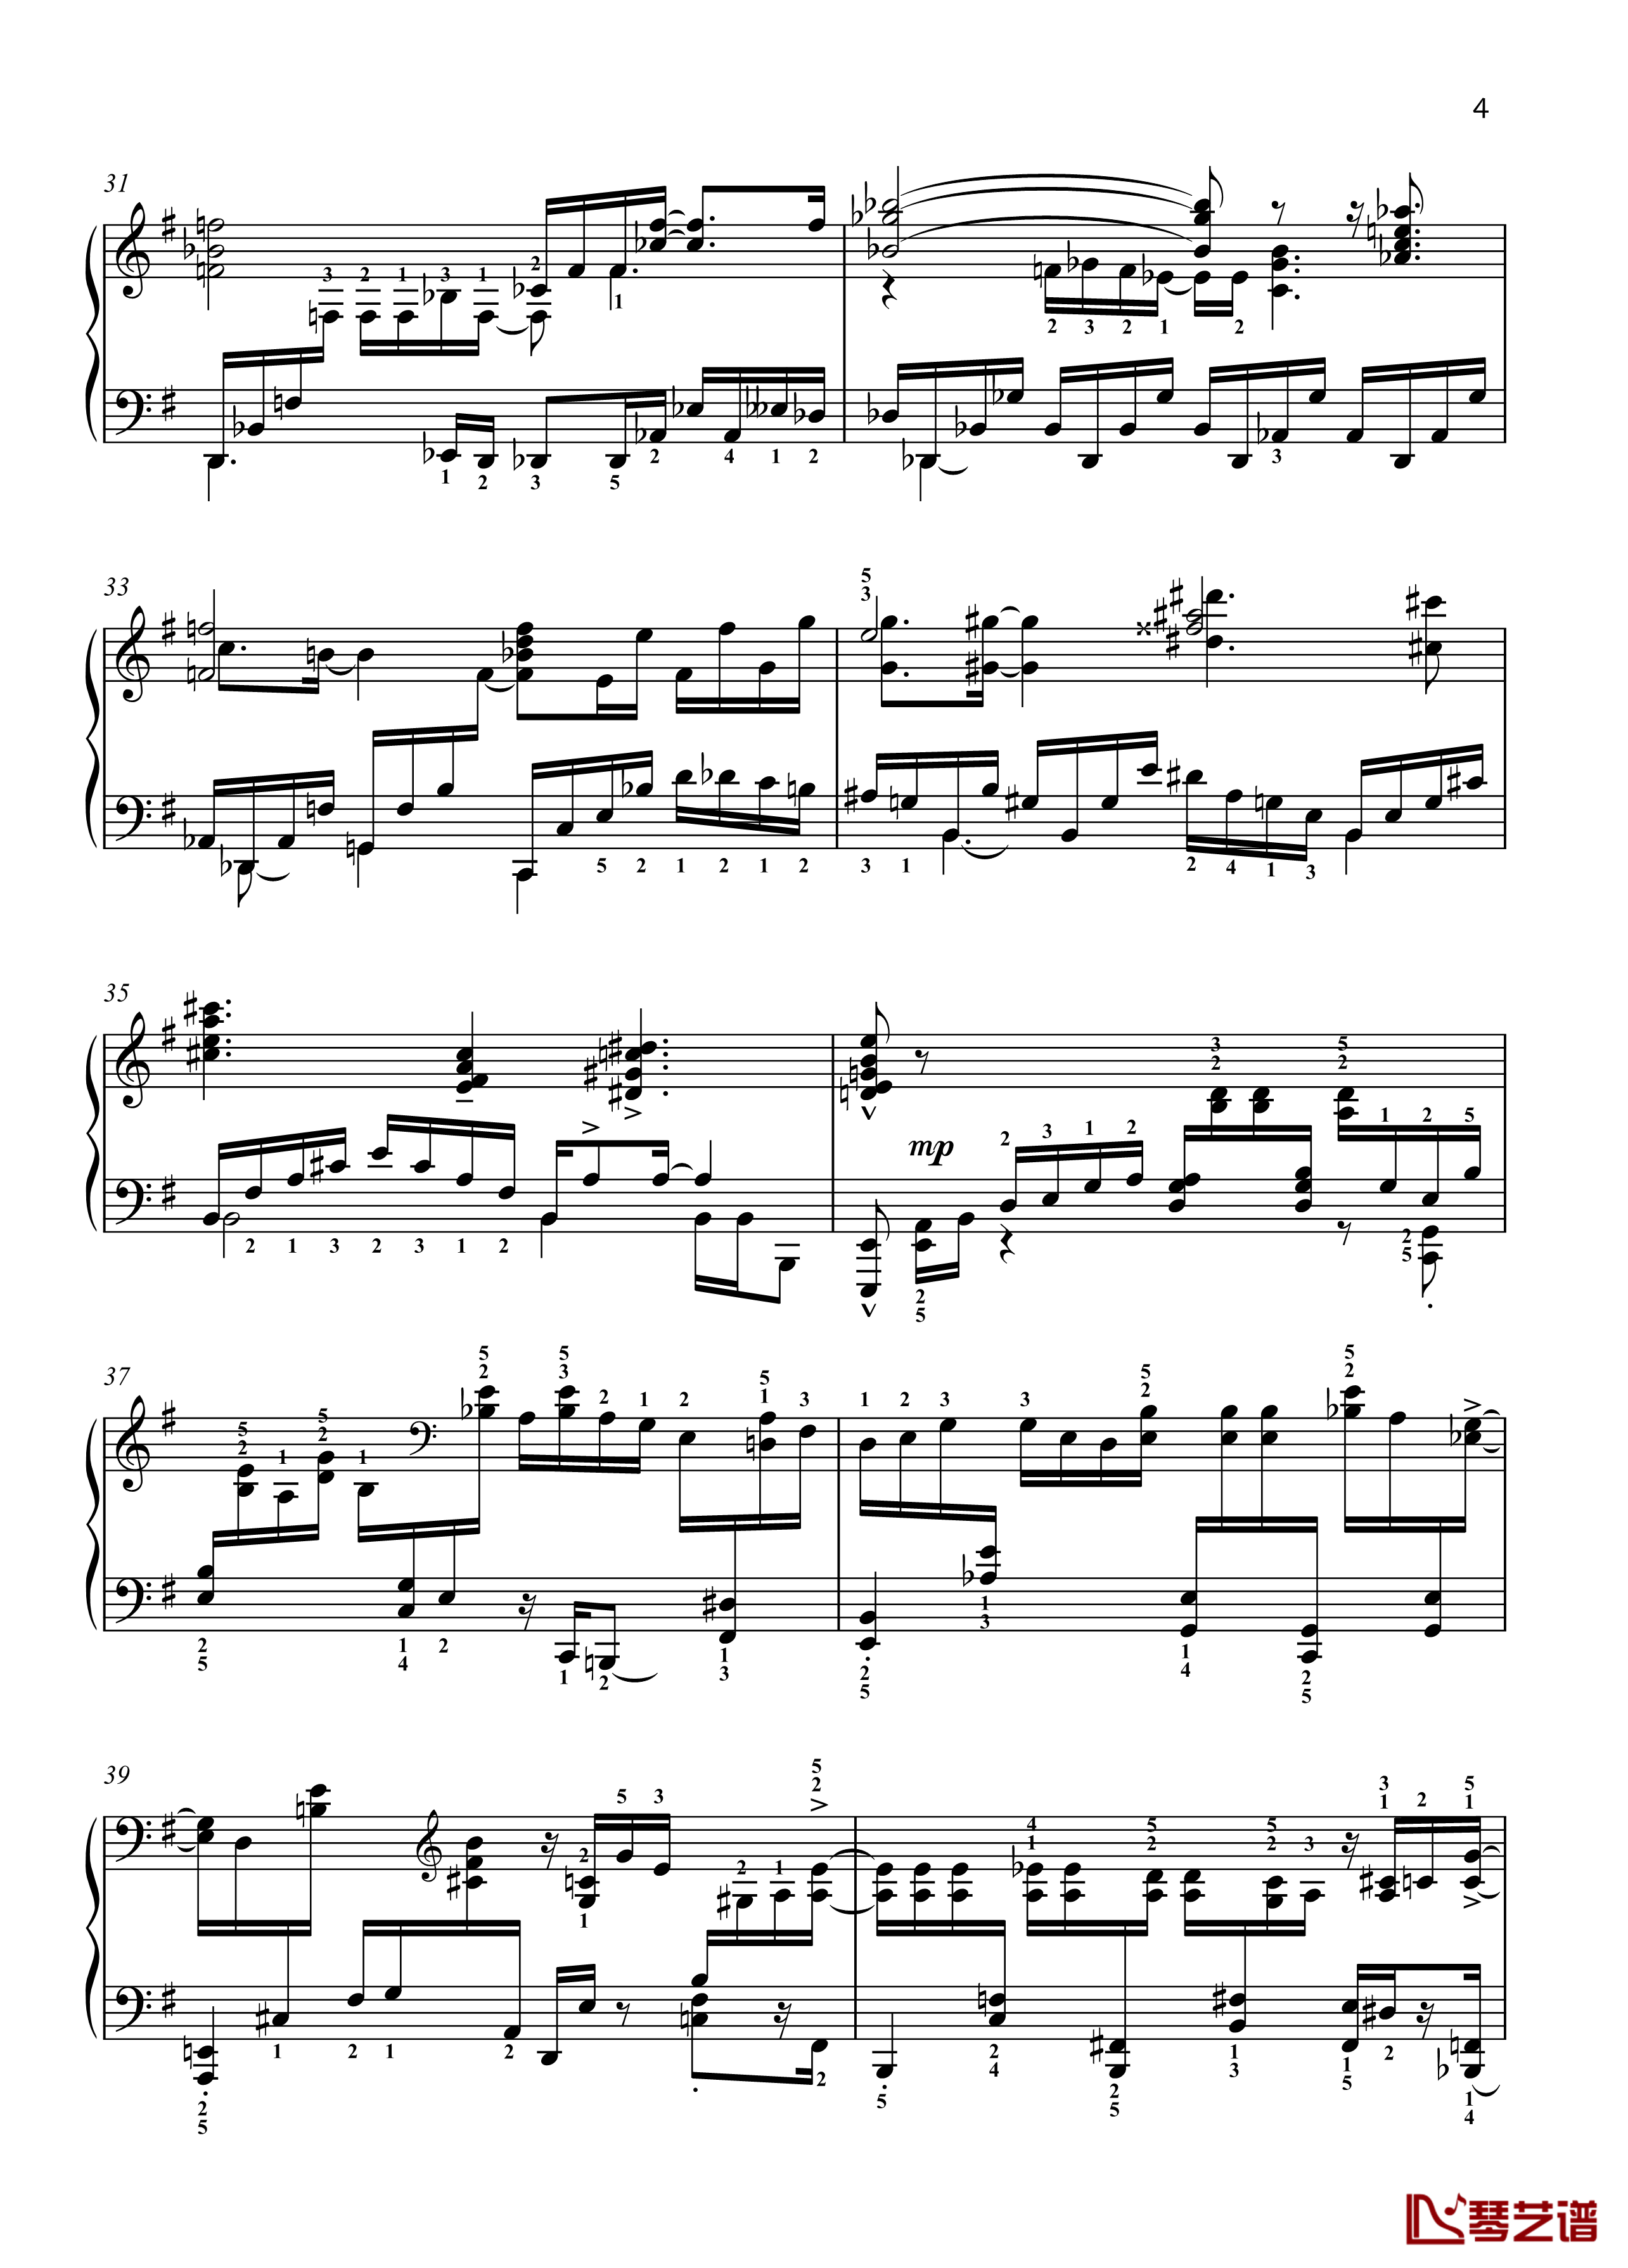 No. 3. Toccatina钢琴谱-带指法-八首音乐会练习曲 Eight Concert ?tudes Op 40-爵士-尼古拉·凯帕斯汀4